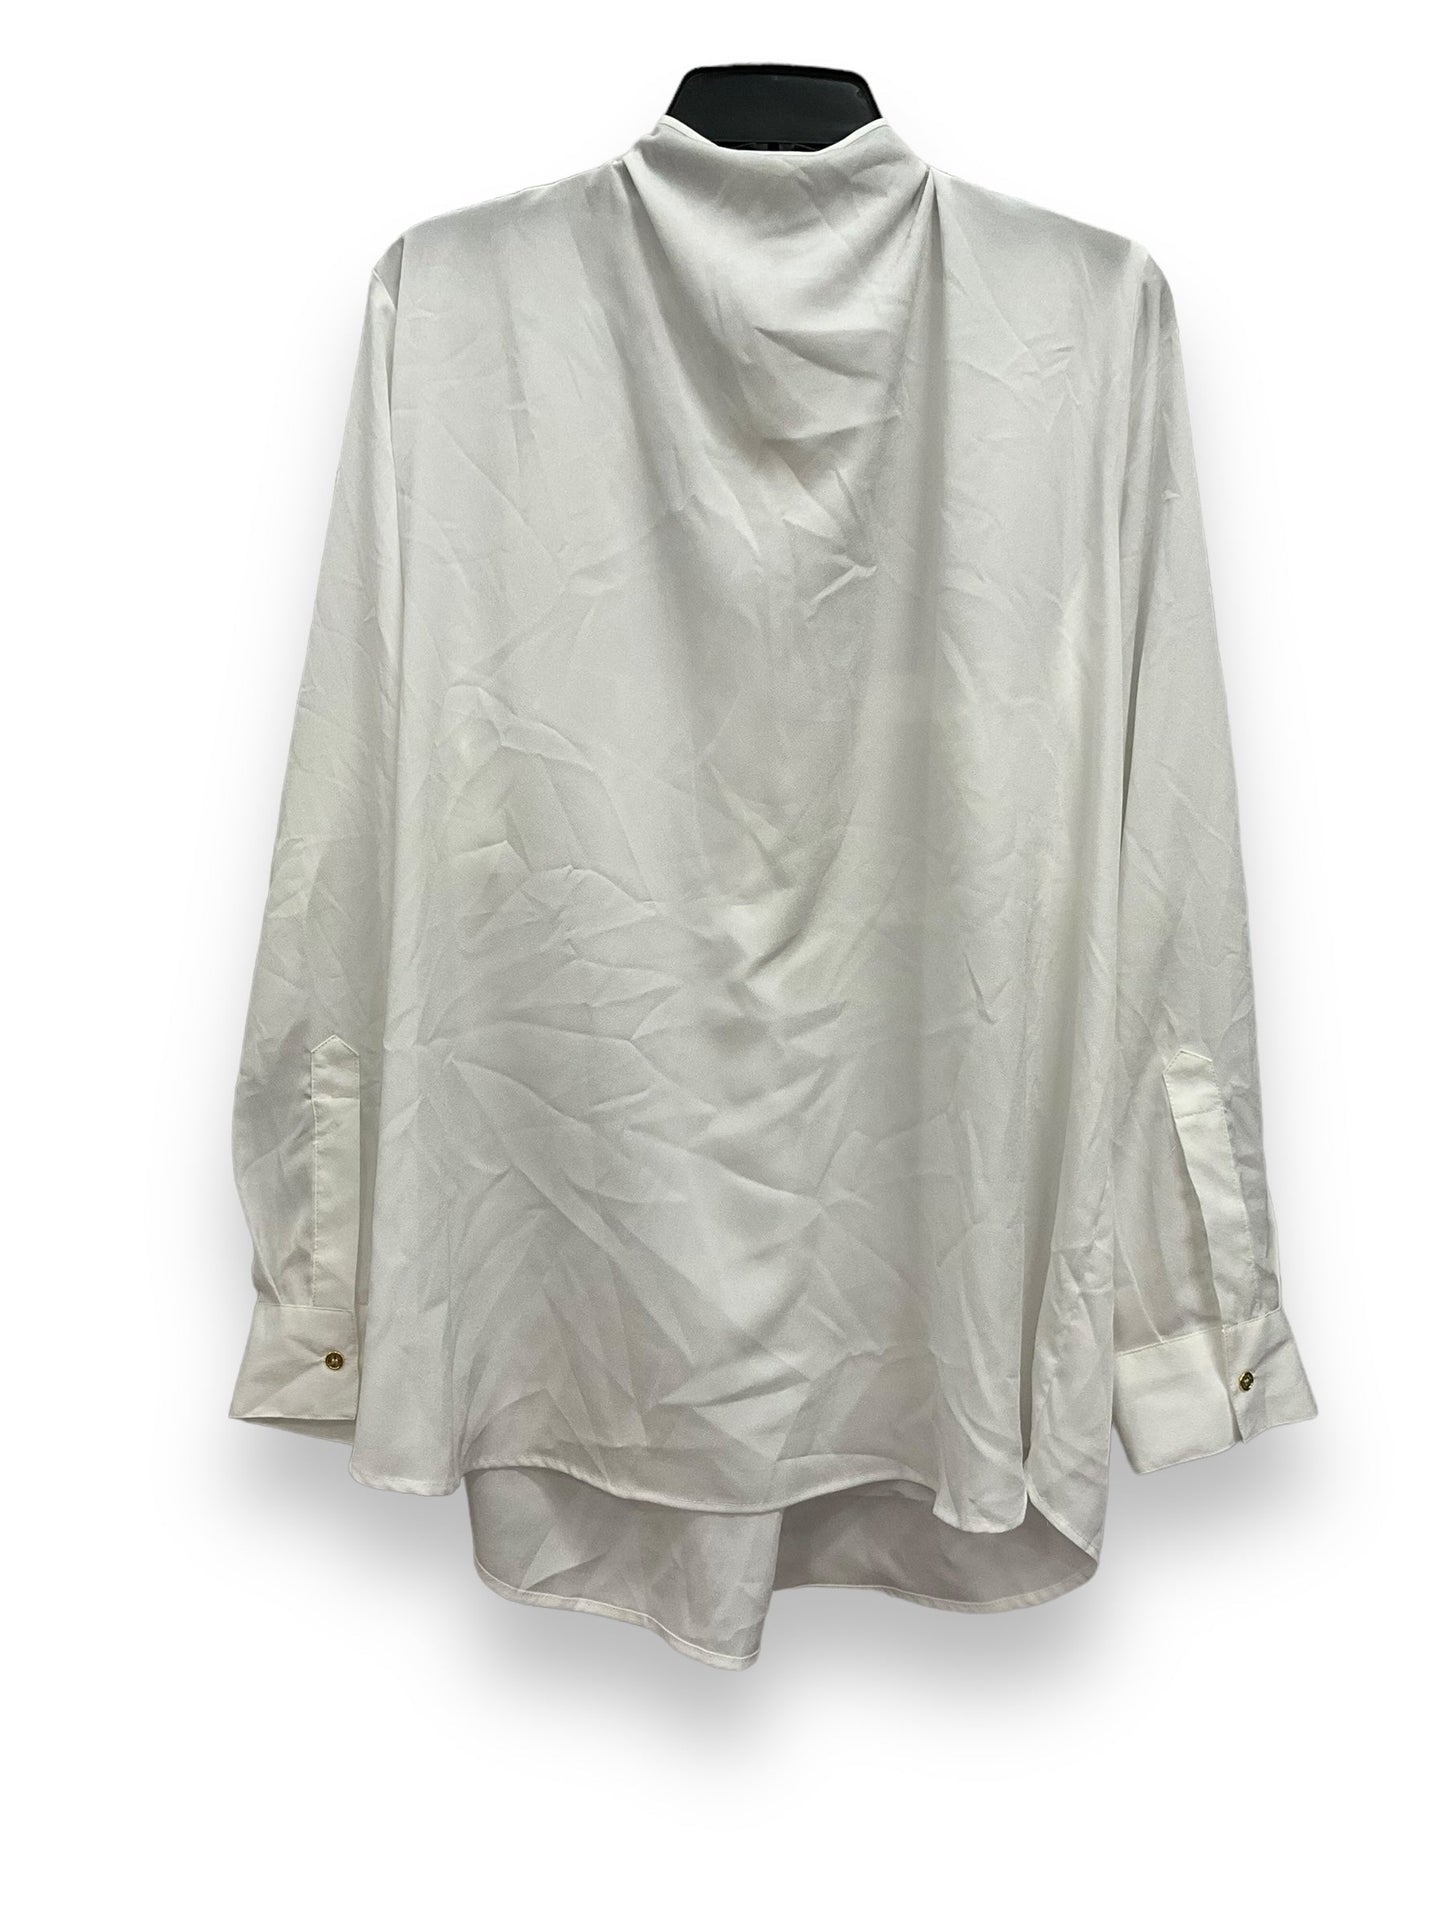 White Blouse Long Sleeve Calvin Klein, Size 2x